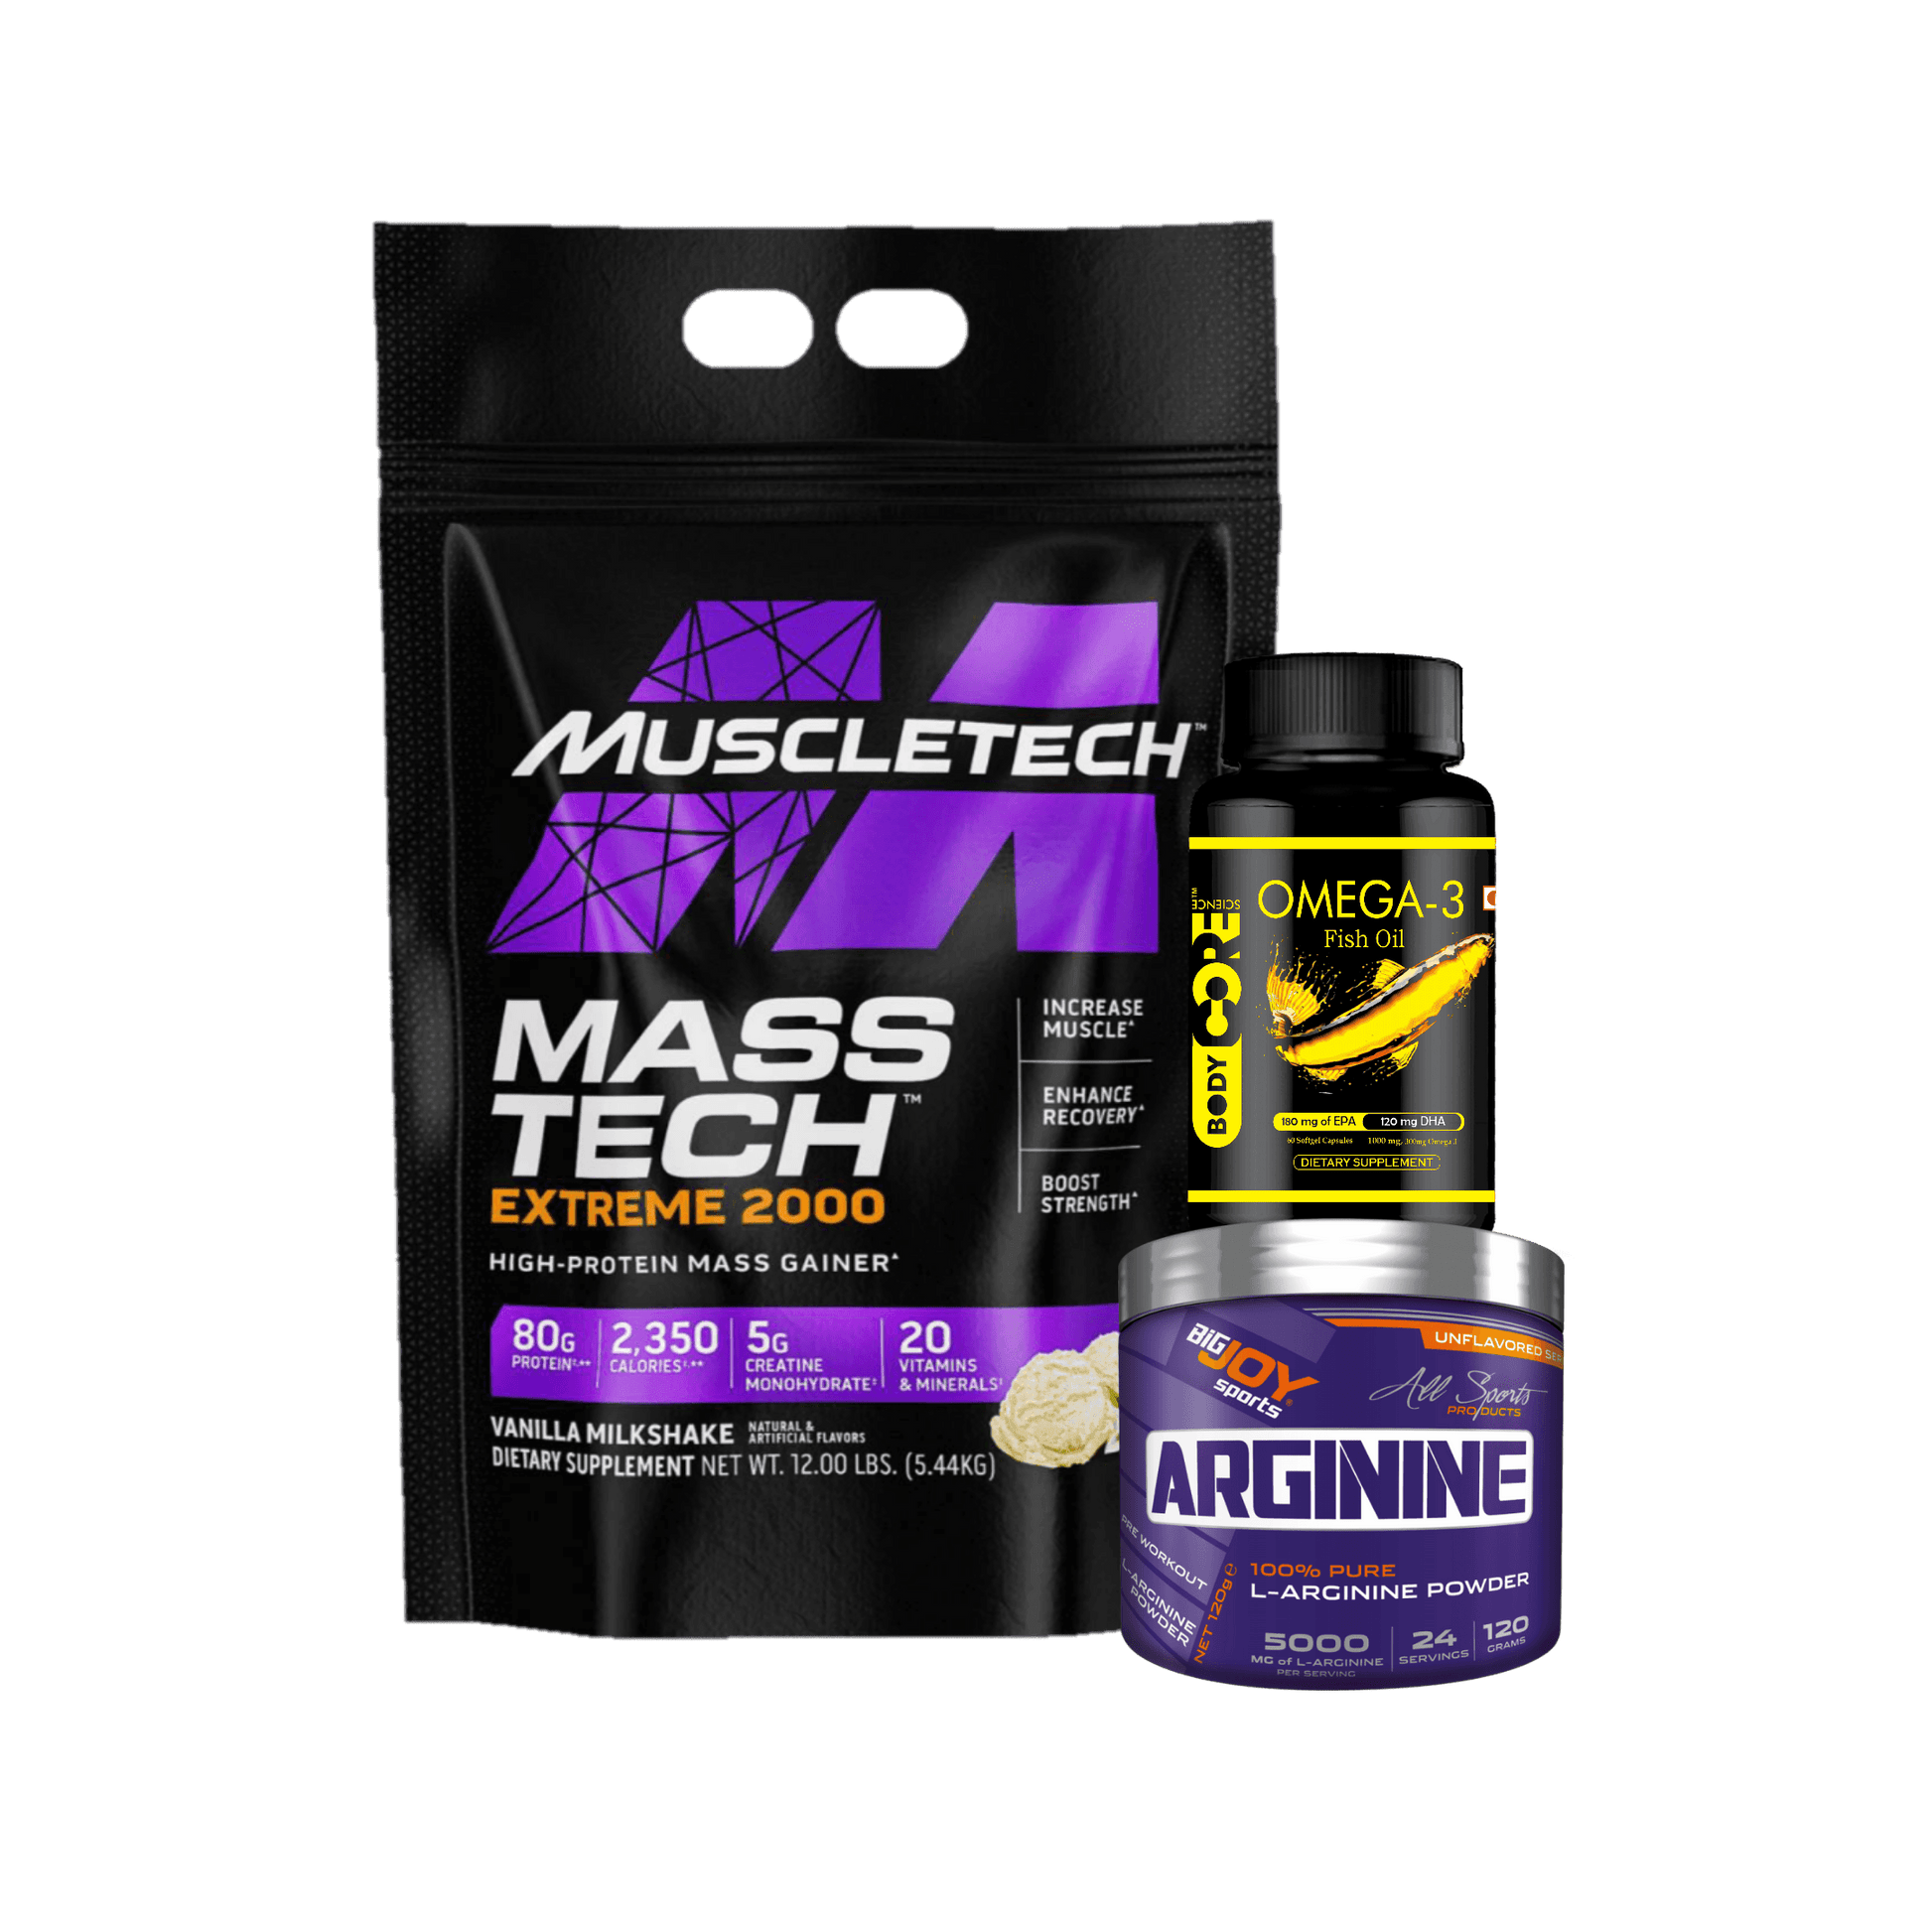 Masstech Extreme + Arginine + Omega 3 - The Supplements Factory